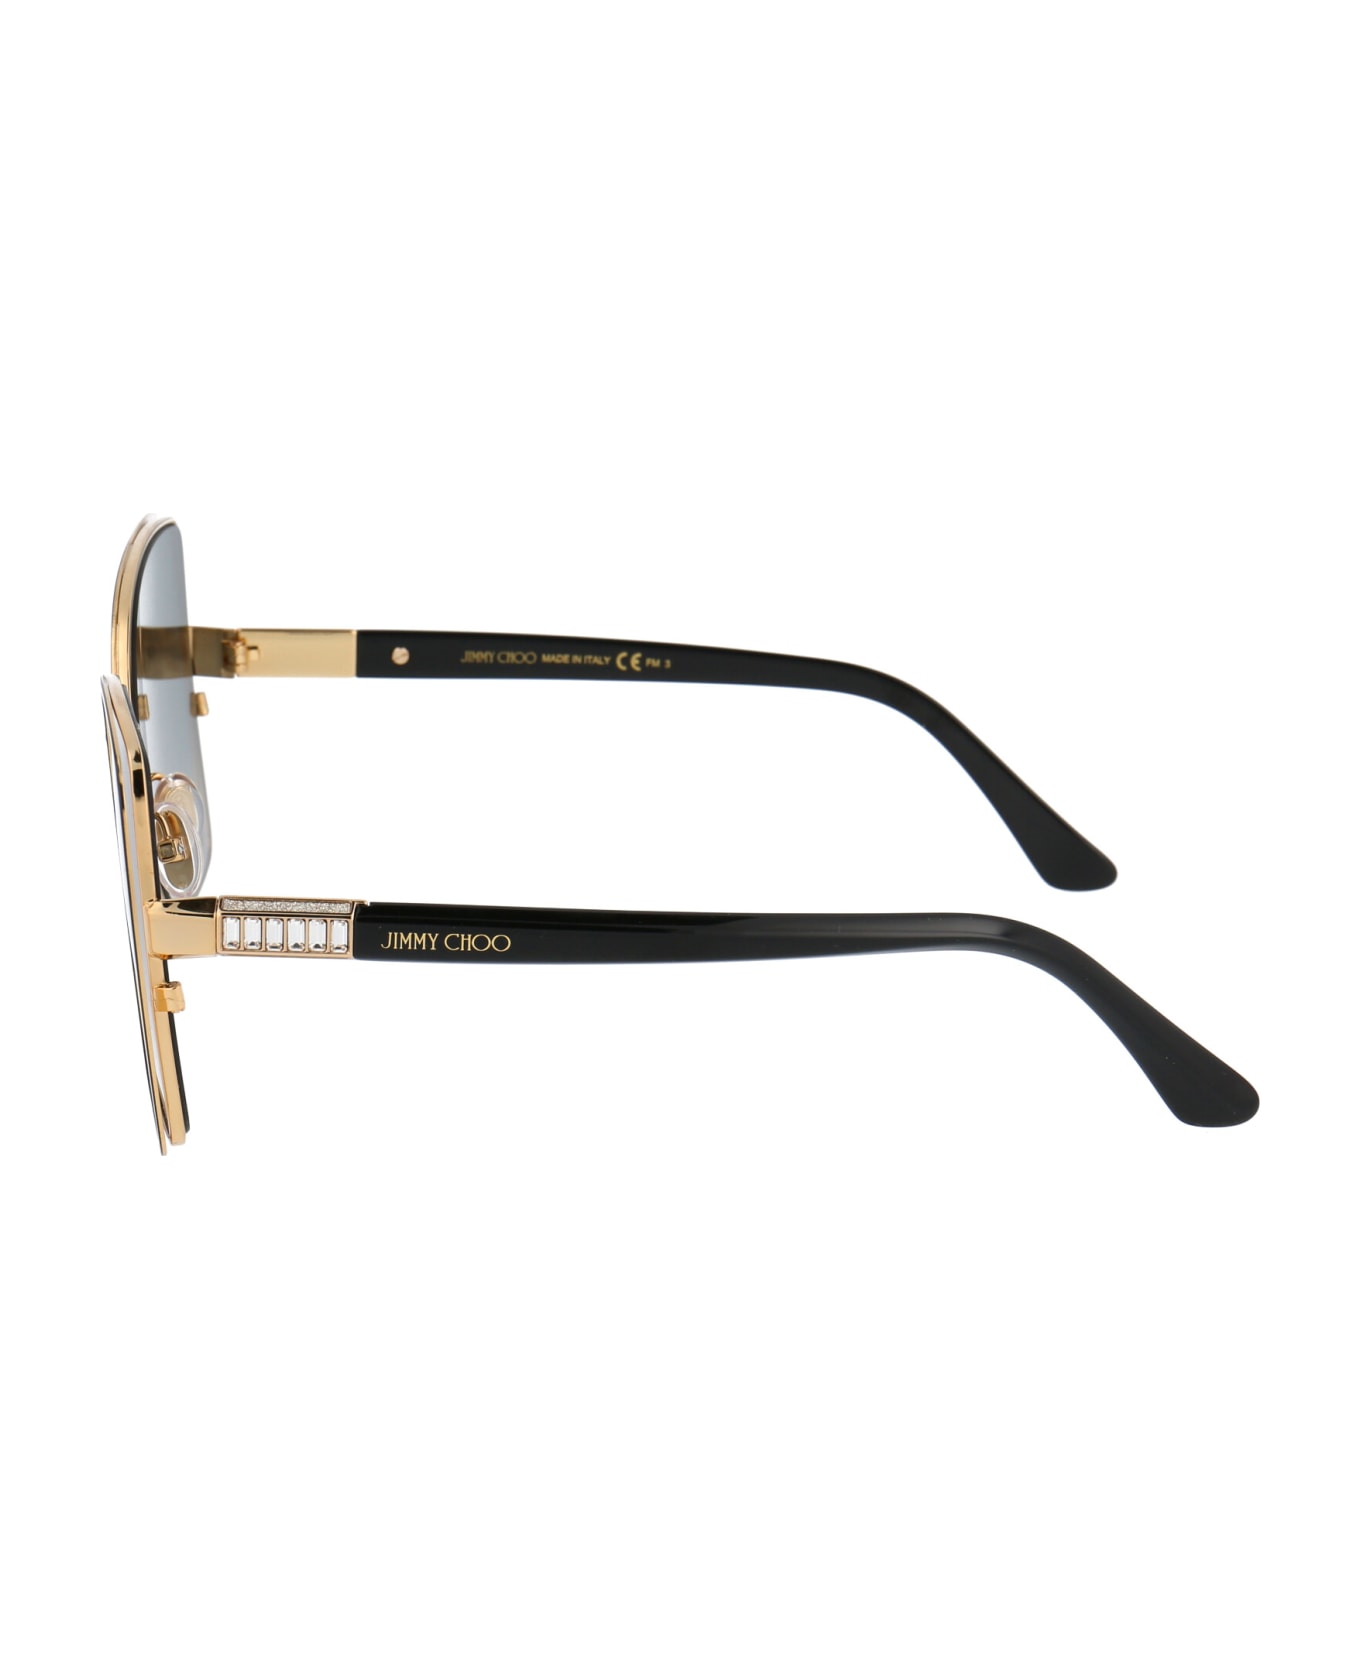 Jimmy Choo Eyewear Frieda/s Sunglasses - 2M29O BLK GOLD B